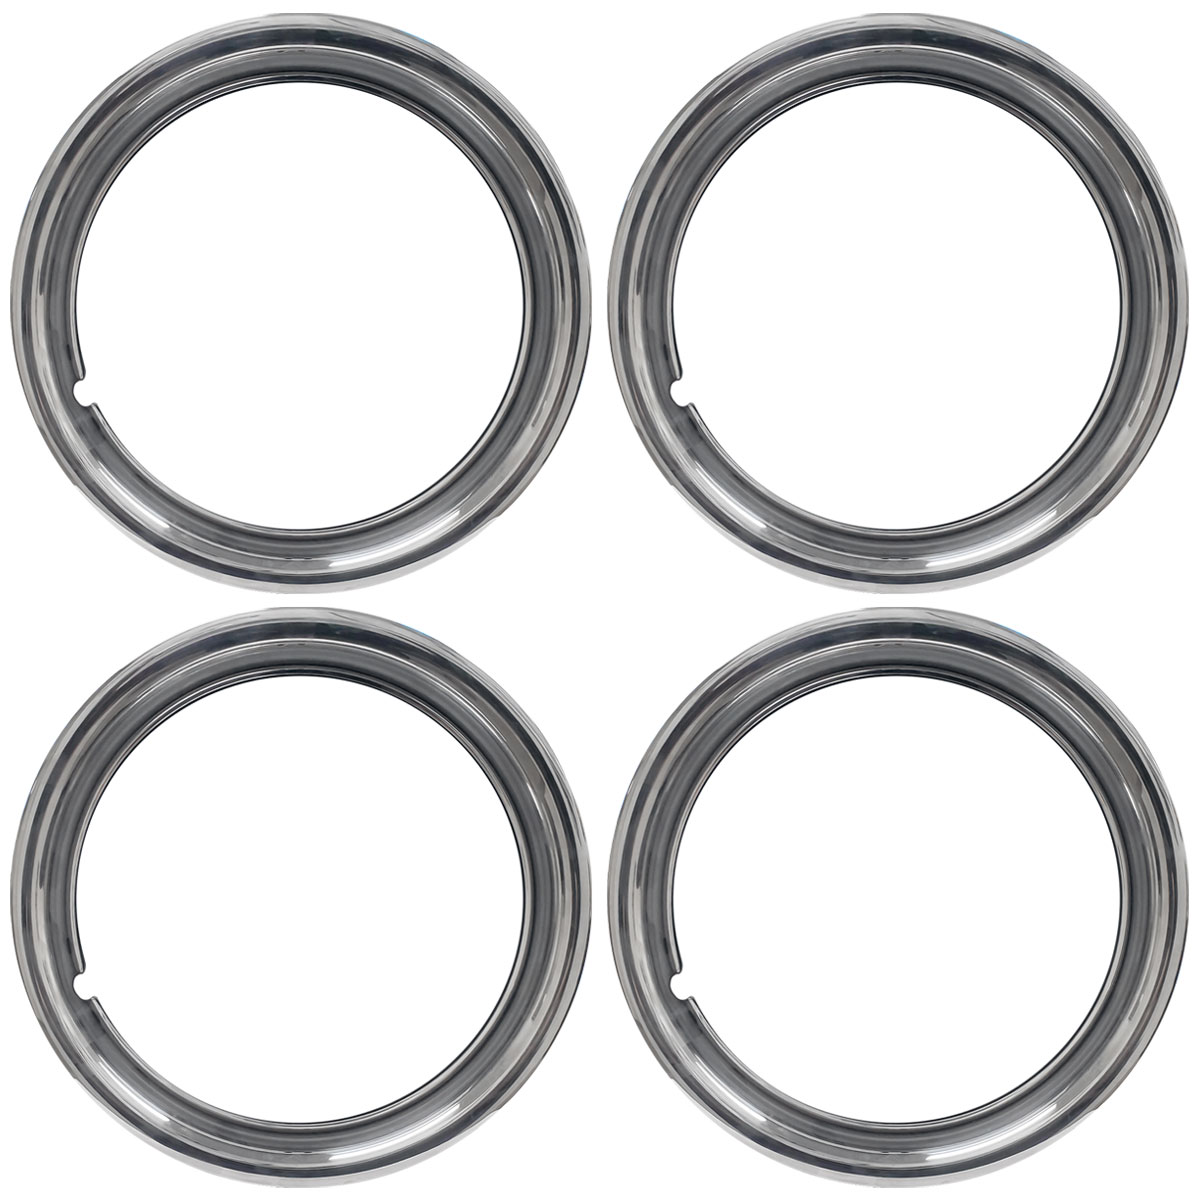 Trim Rings - Stainless Steel - 4 Pieces - fits 14" Stock Steel VW Wheels